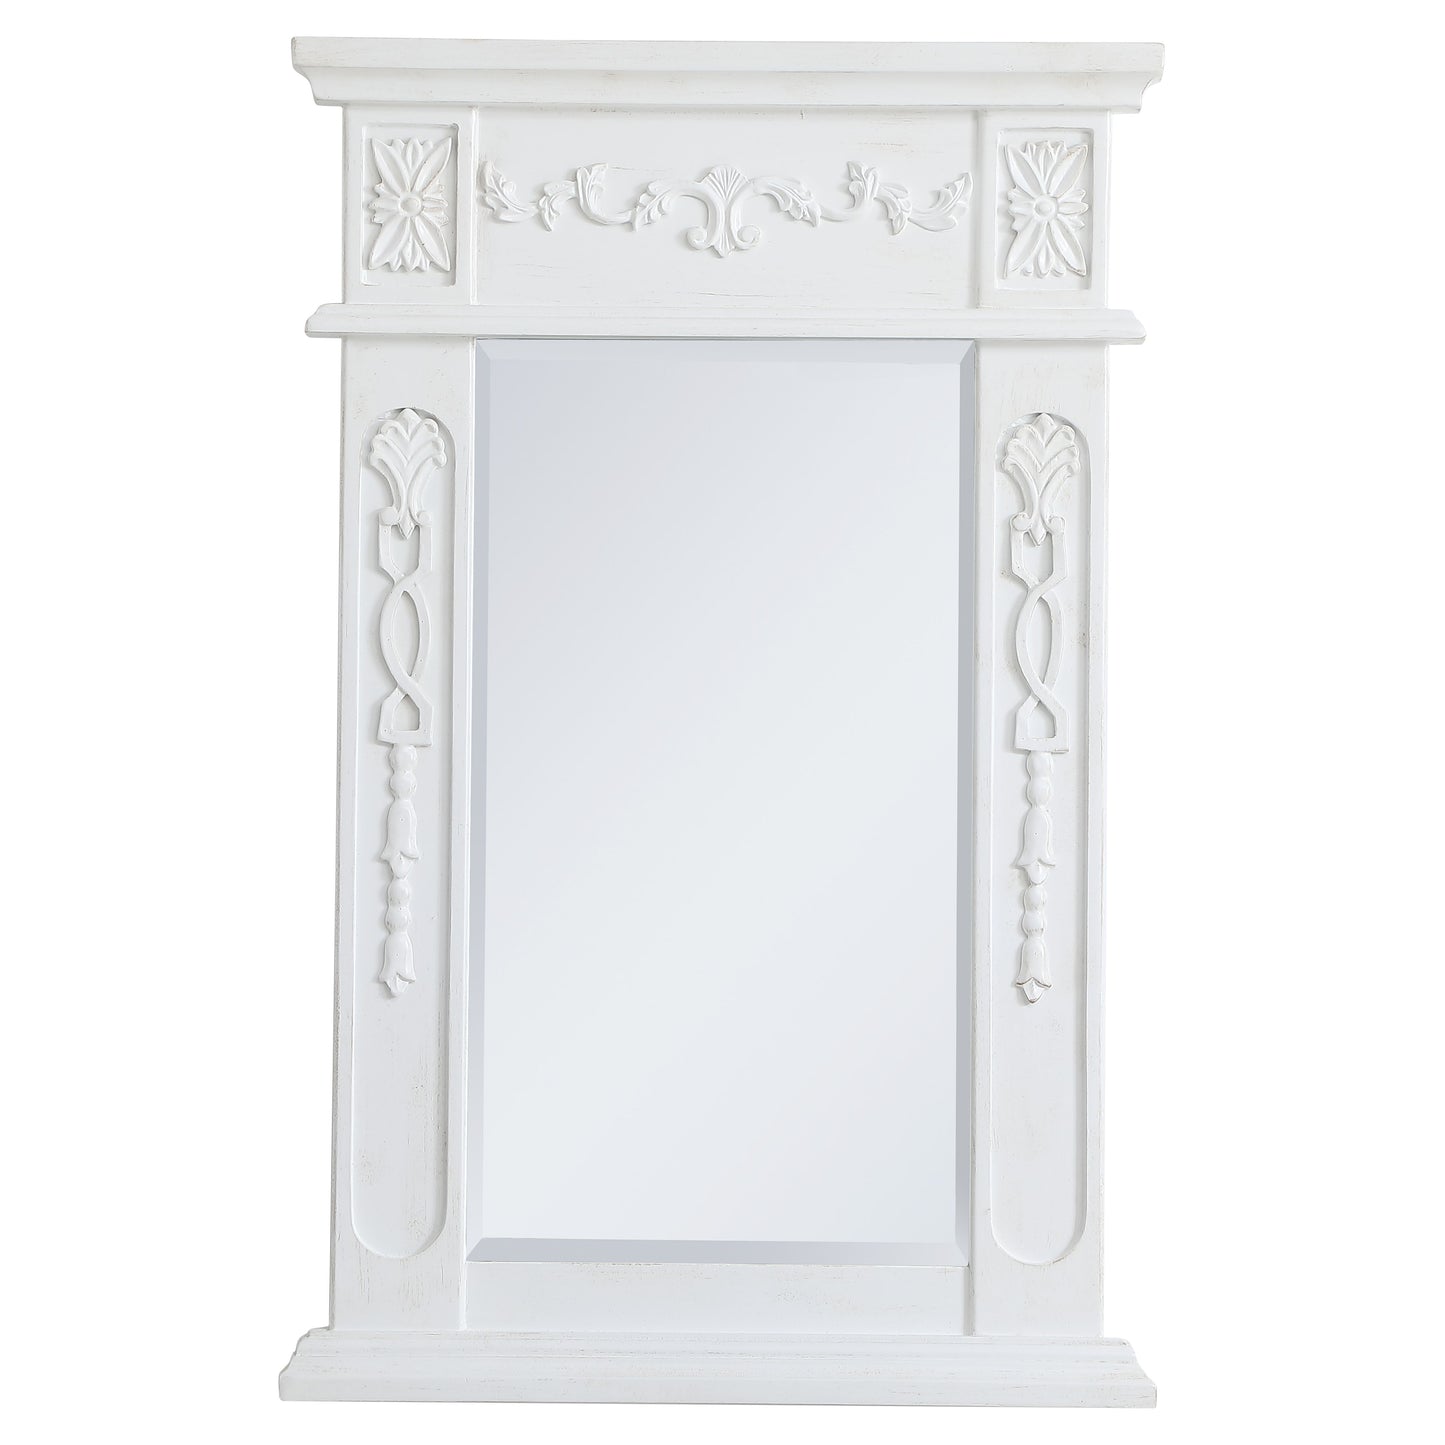 VM11828AW Danville 18" x 28" Wood Framed Decorative Mirror in Antique White